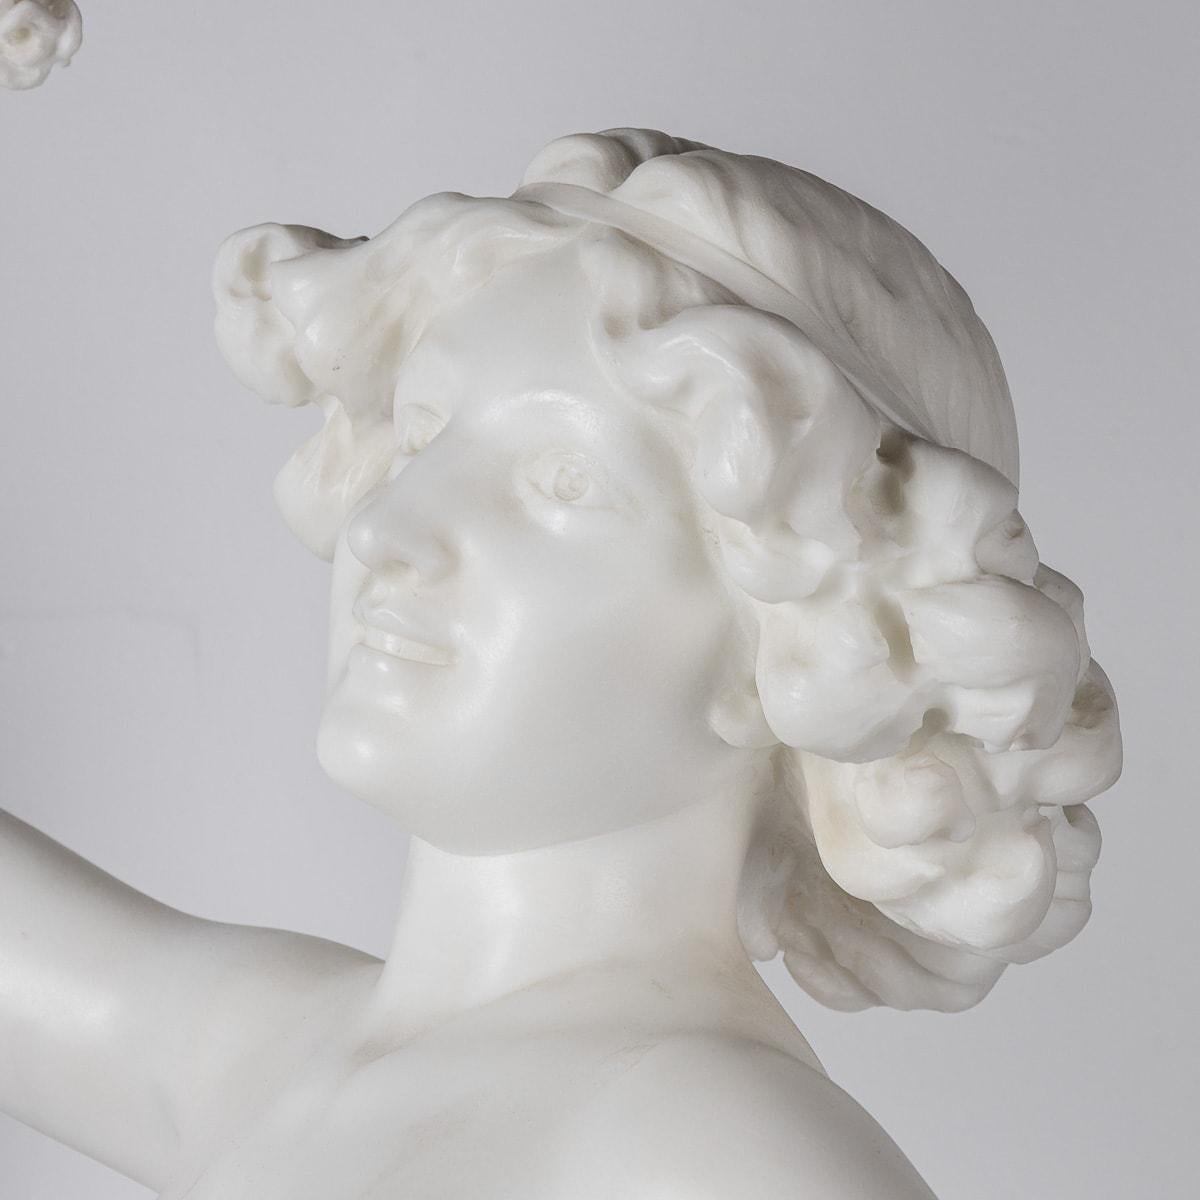 19th Century Italian Marble Figure Of A Nude, Adolfo Cipriani (1880-1930) For Sale 13